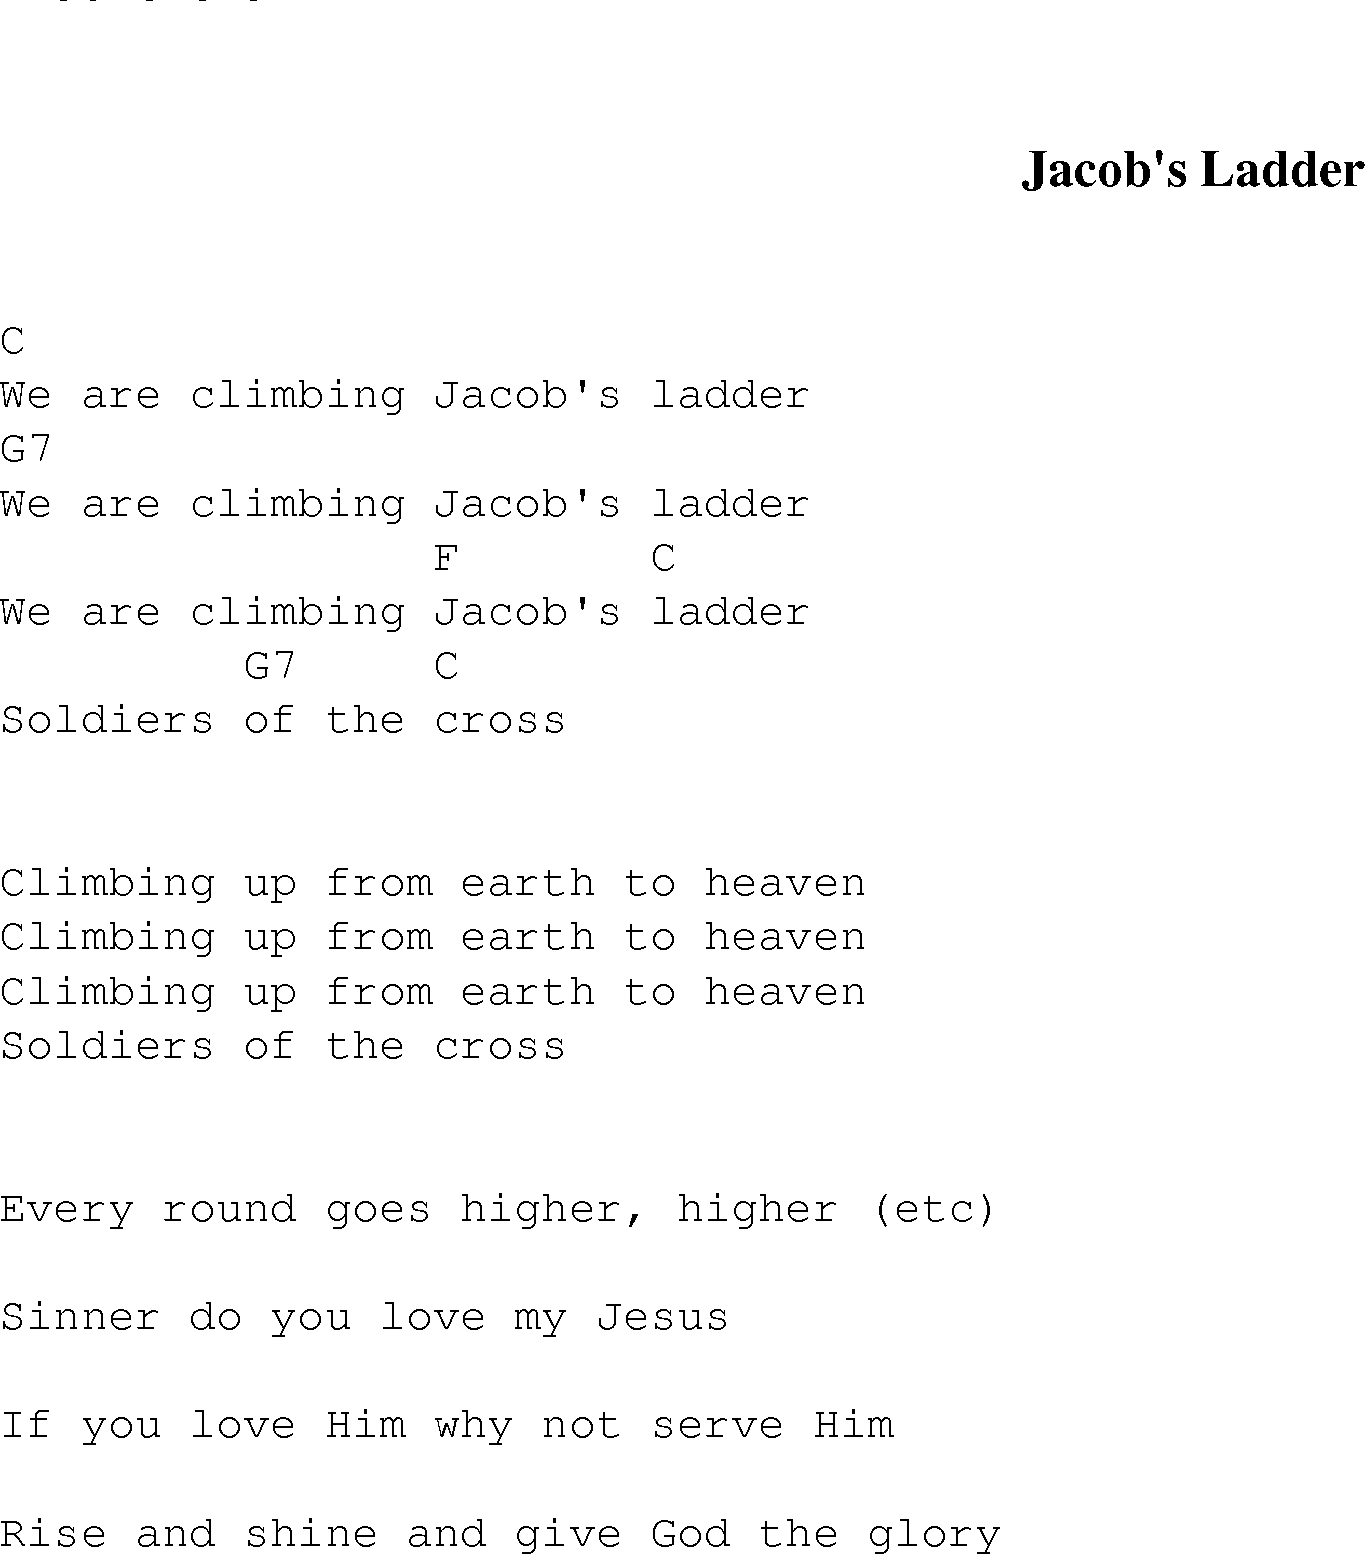 Gospel Song: jacobs_ladder, lyrics and chords.